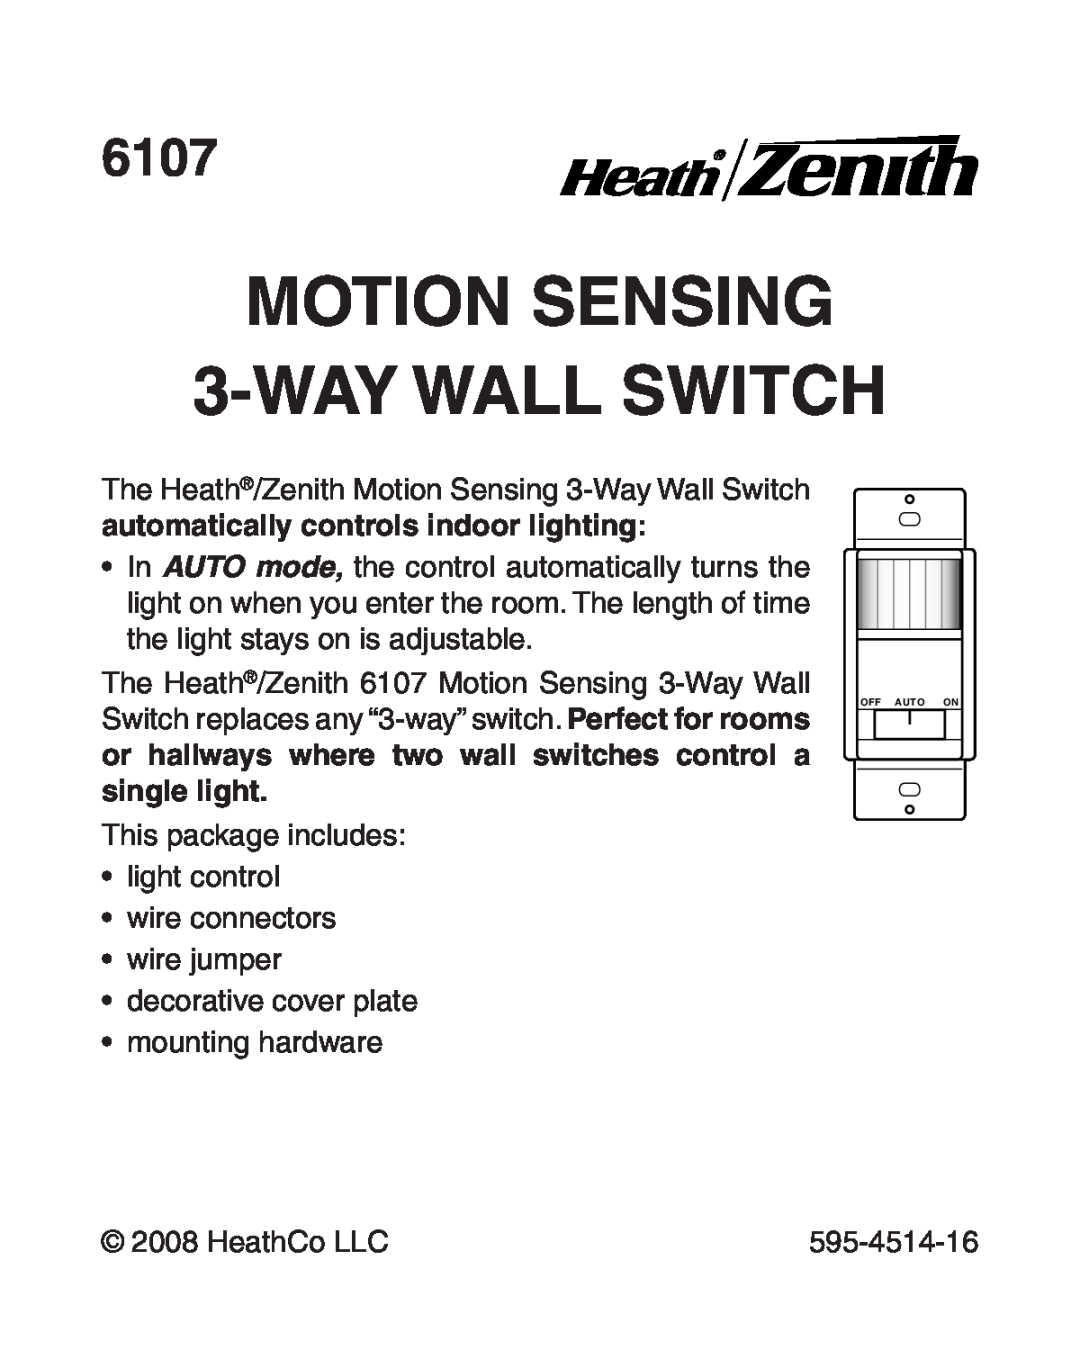 Heath Zenith 6107 manual Motion Sensing 3-WayWall Switch 